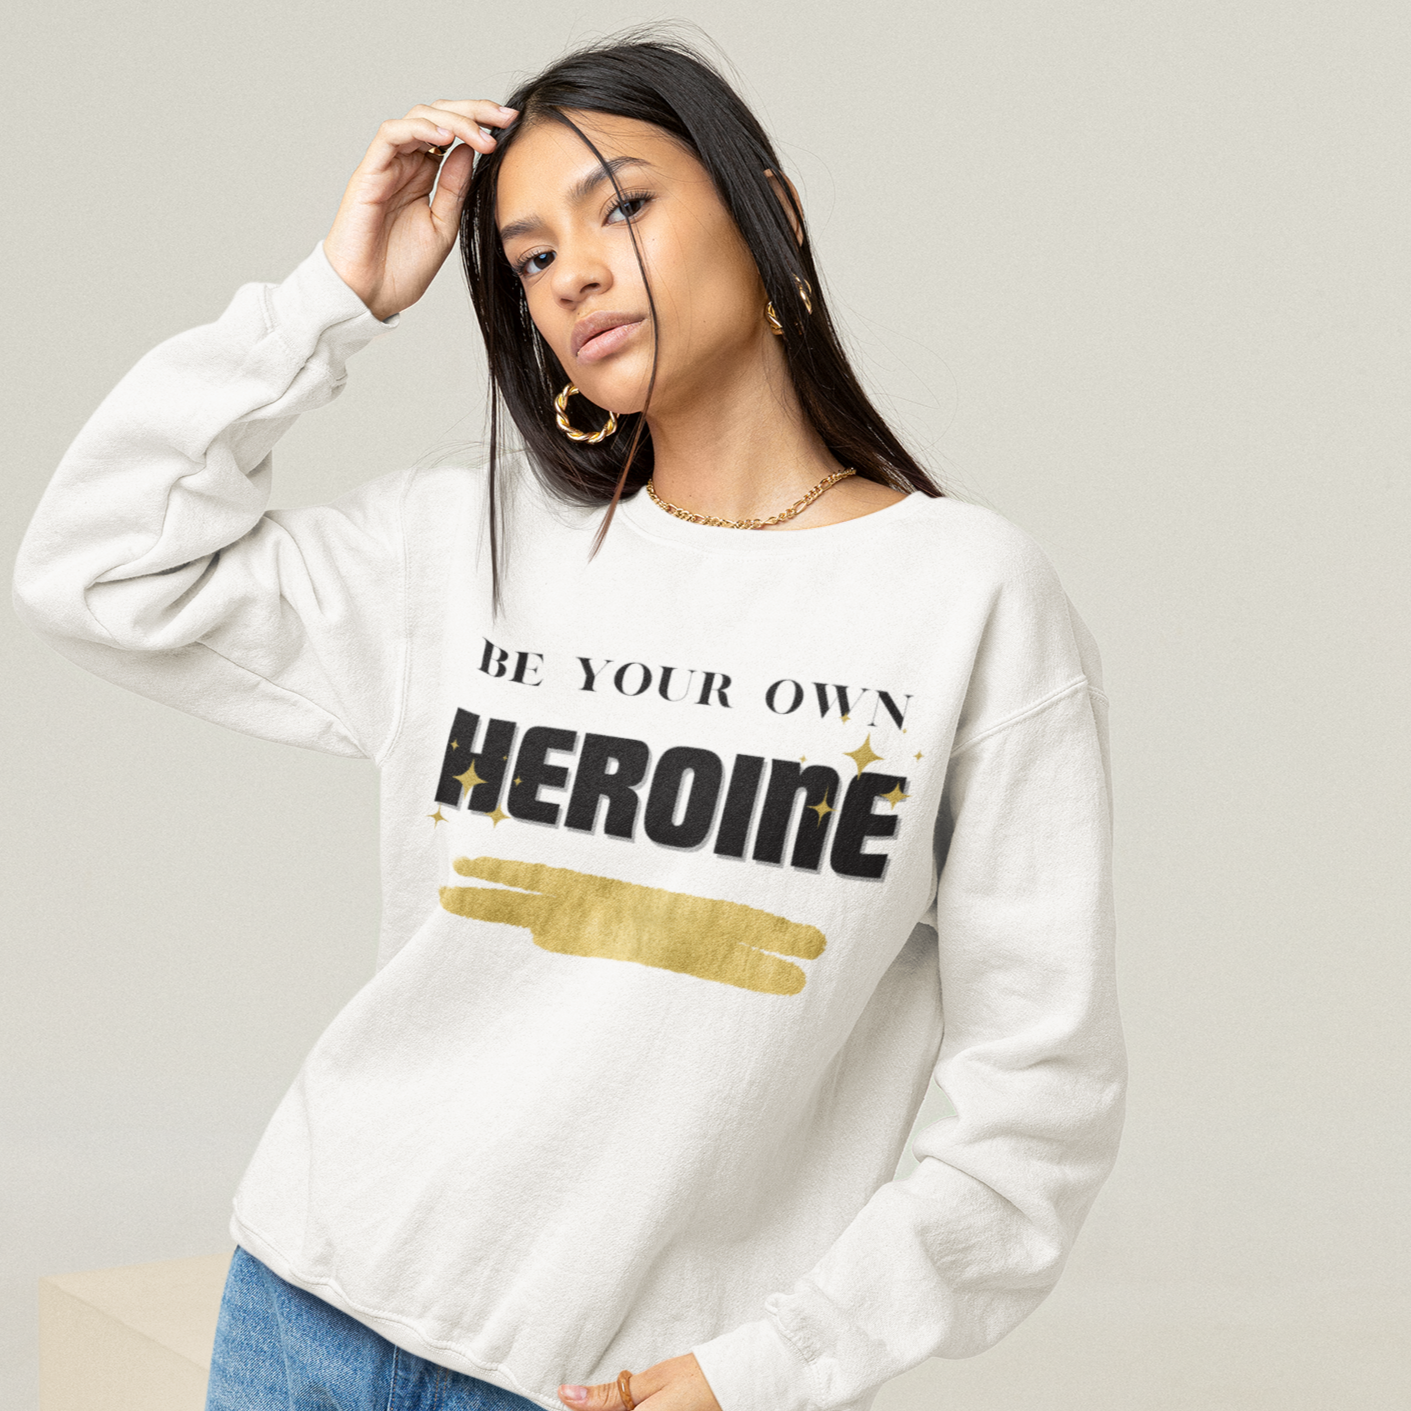 Be Your Own Heroine - Sweatshirt Unisex